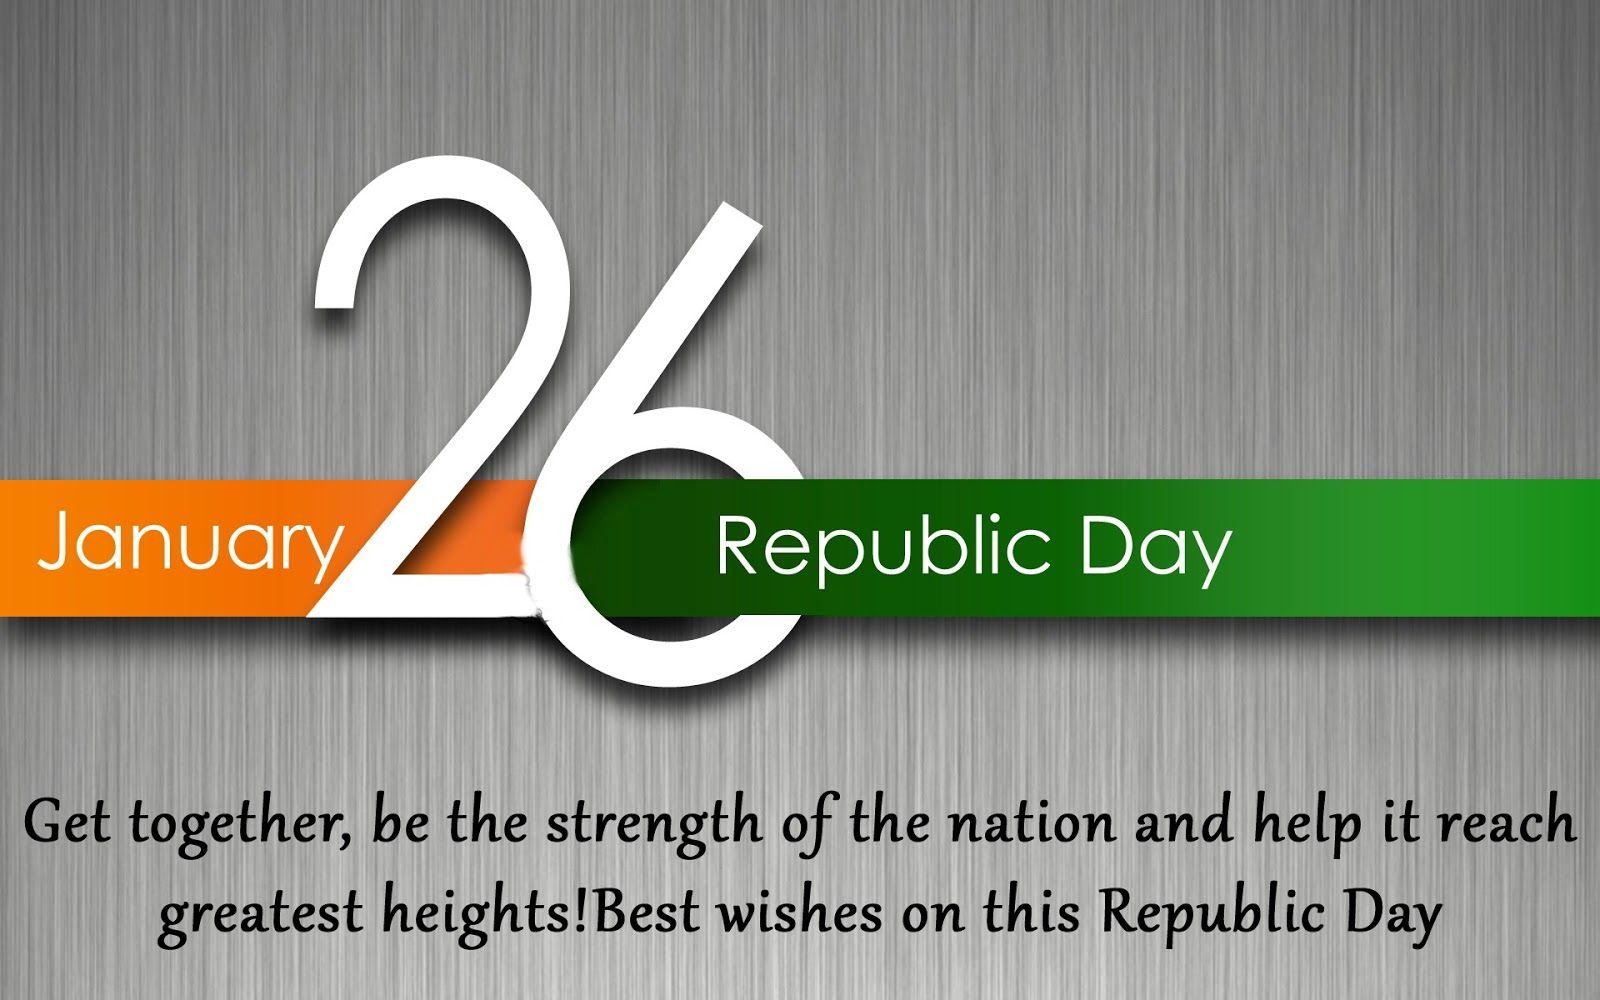 Happy Republic Day 2017 Image, Quotes, speech, wallpaper, pics